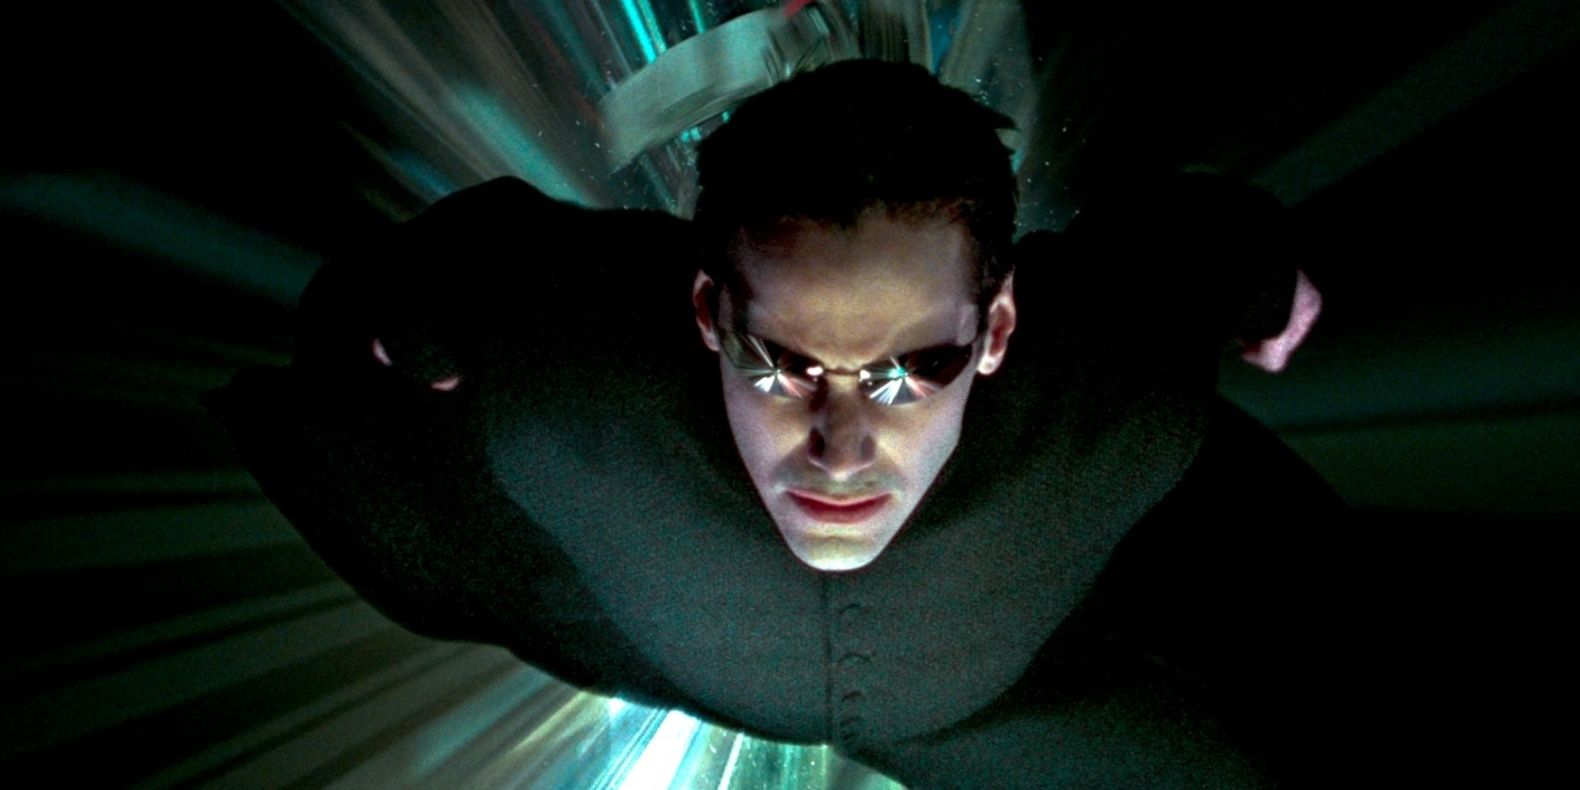 Neo flies through the Matrix in The Matrix Reloaded.